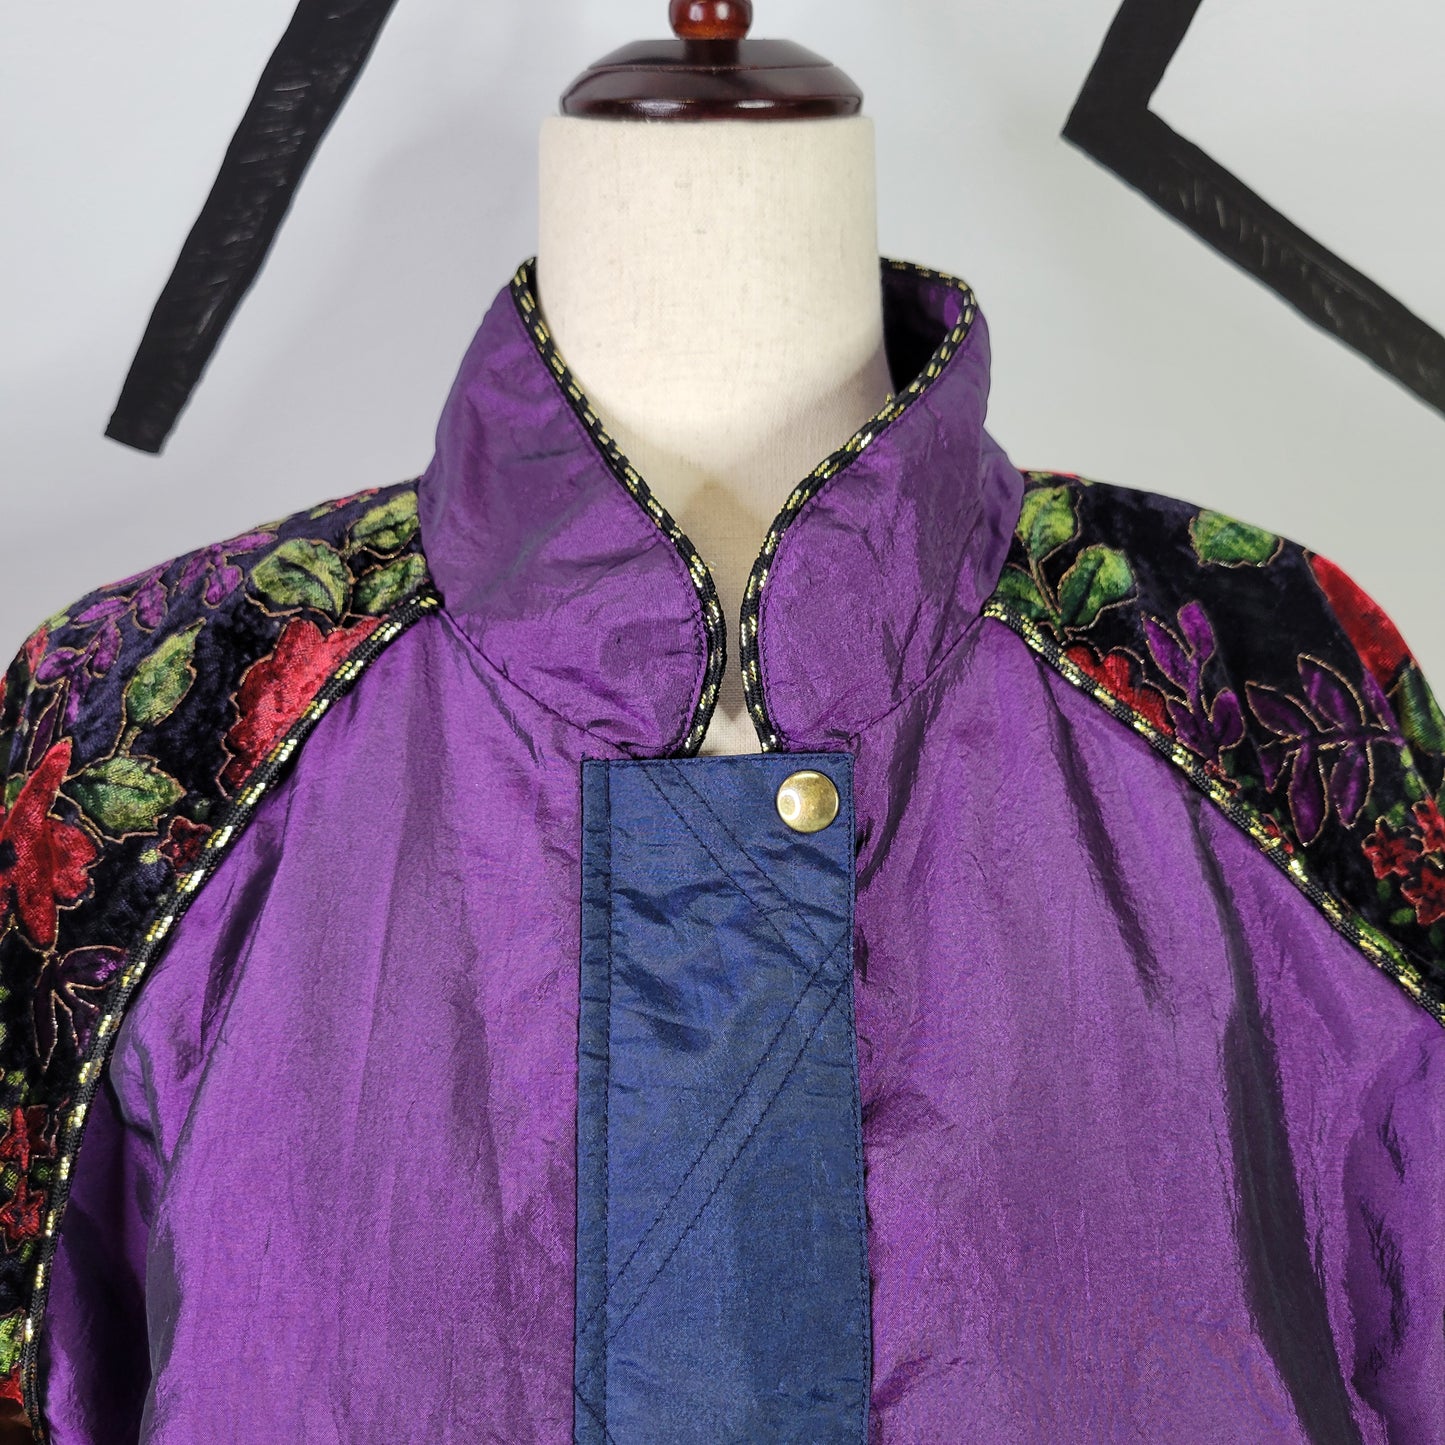 Westbound Vintage Color Blocked Windbreaker Jacket - Medium